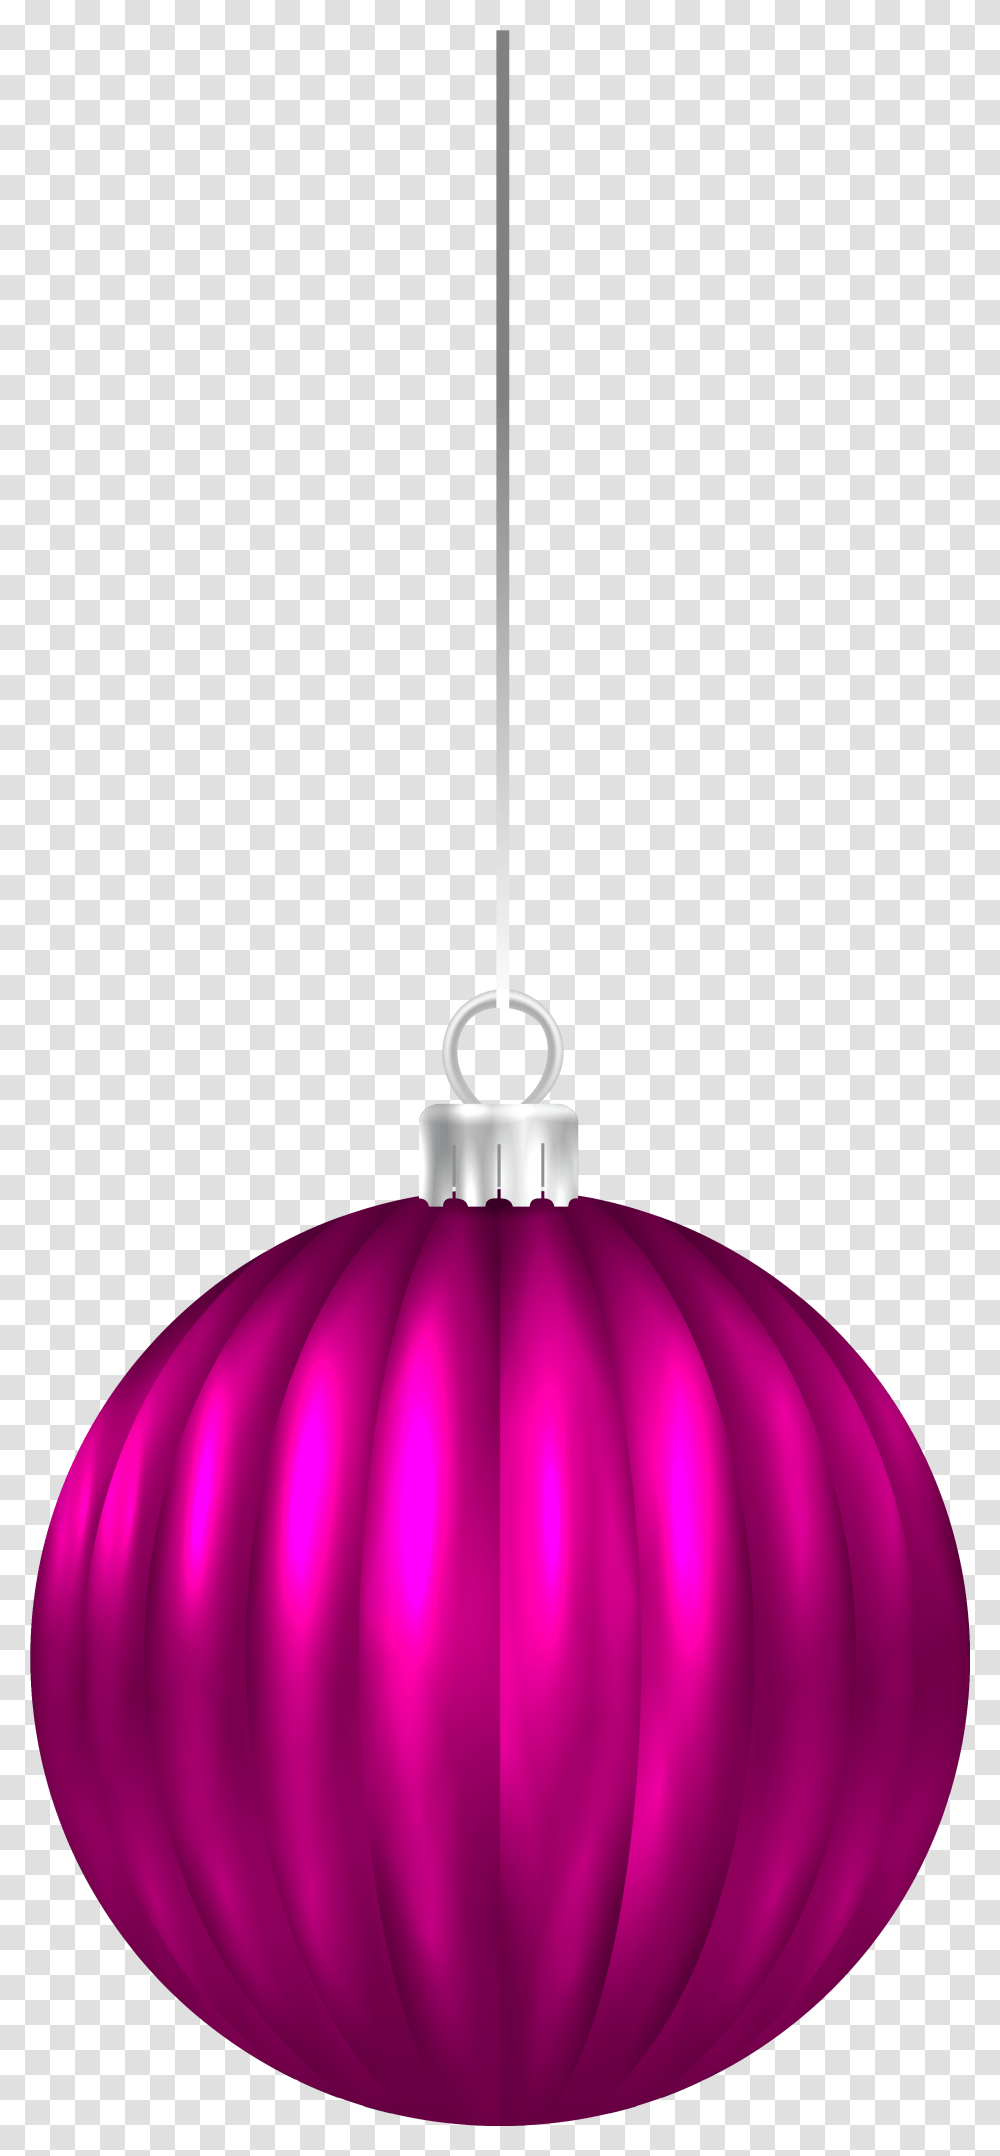 Pink Christmas Ball Ornament Clip Art Image Pink Christmas Ball, Lamp, Lighting, Ceiling Light, Light Fixture Transparent Png